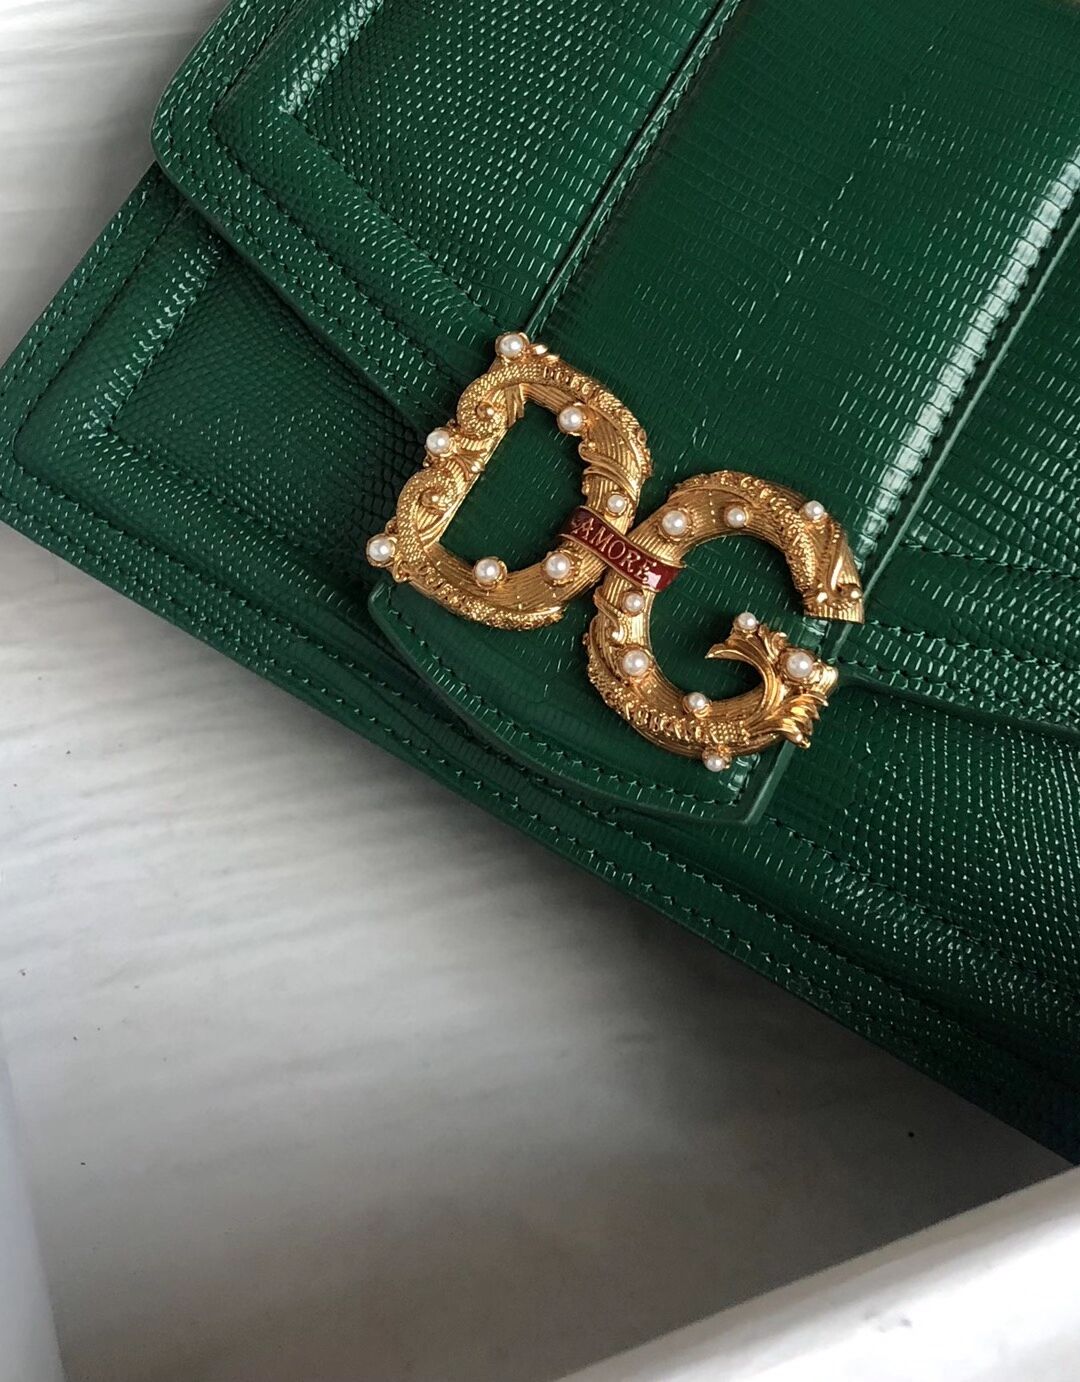 Dolce & Gabbana Origianl Lizard skin Leather Bag 4916F Blackish green